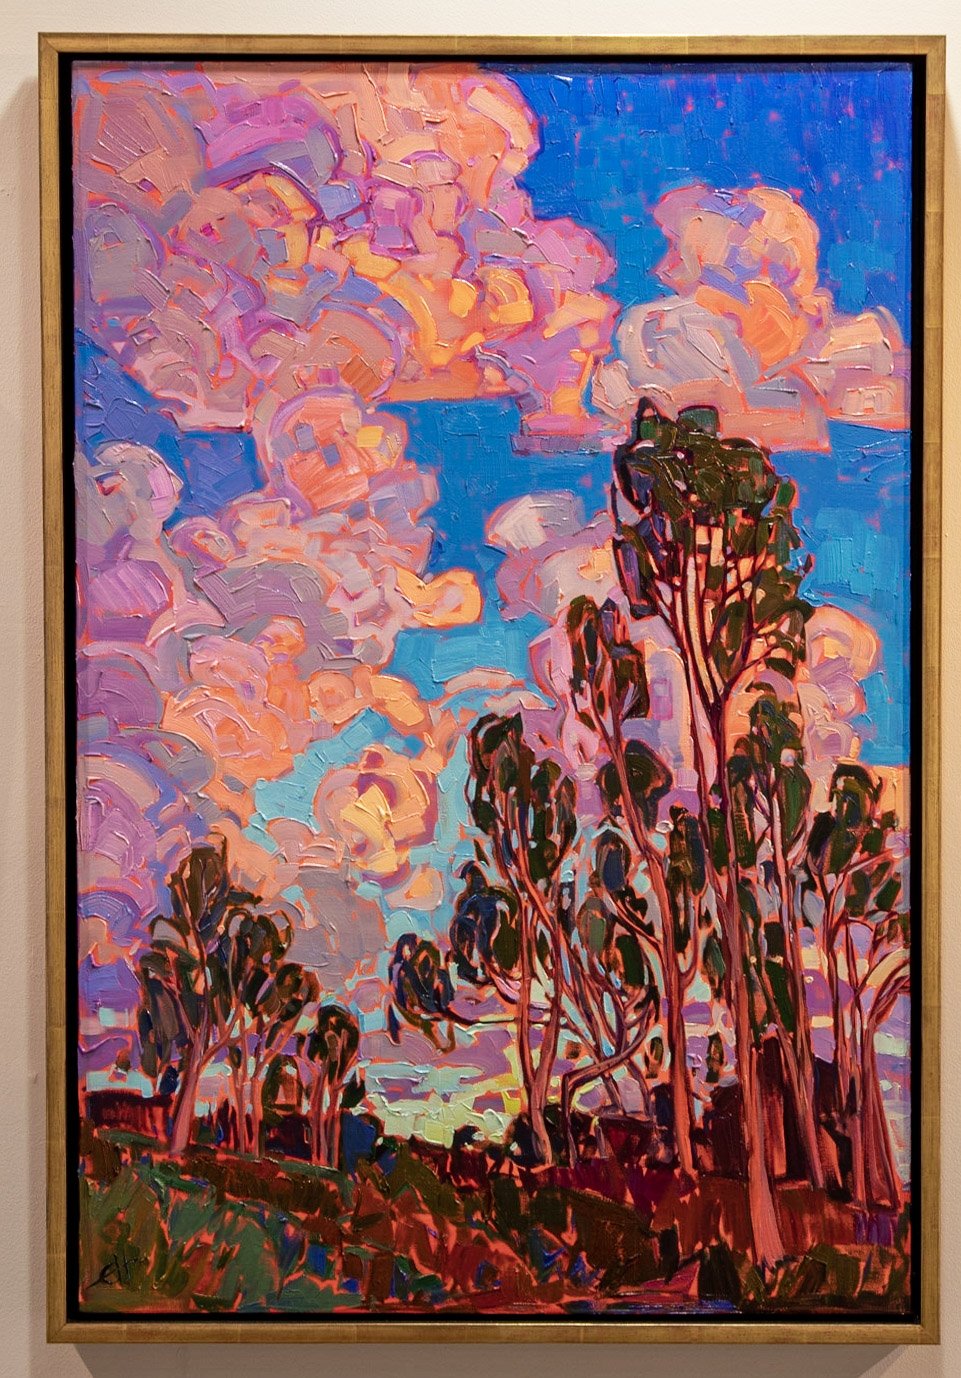 Erin Hanson, "Sunset Clouds"